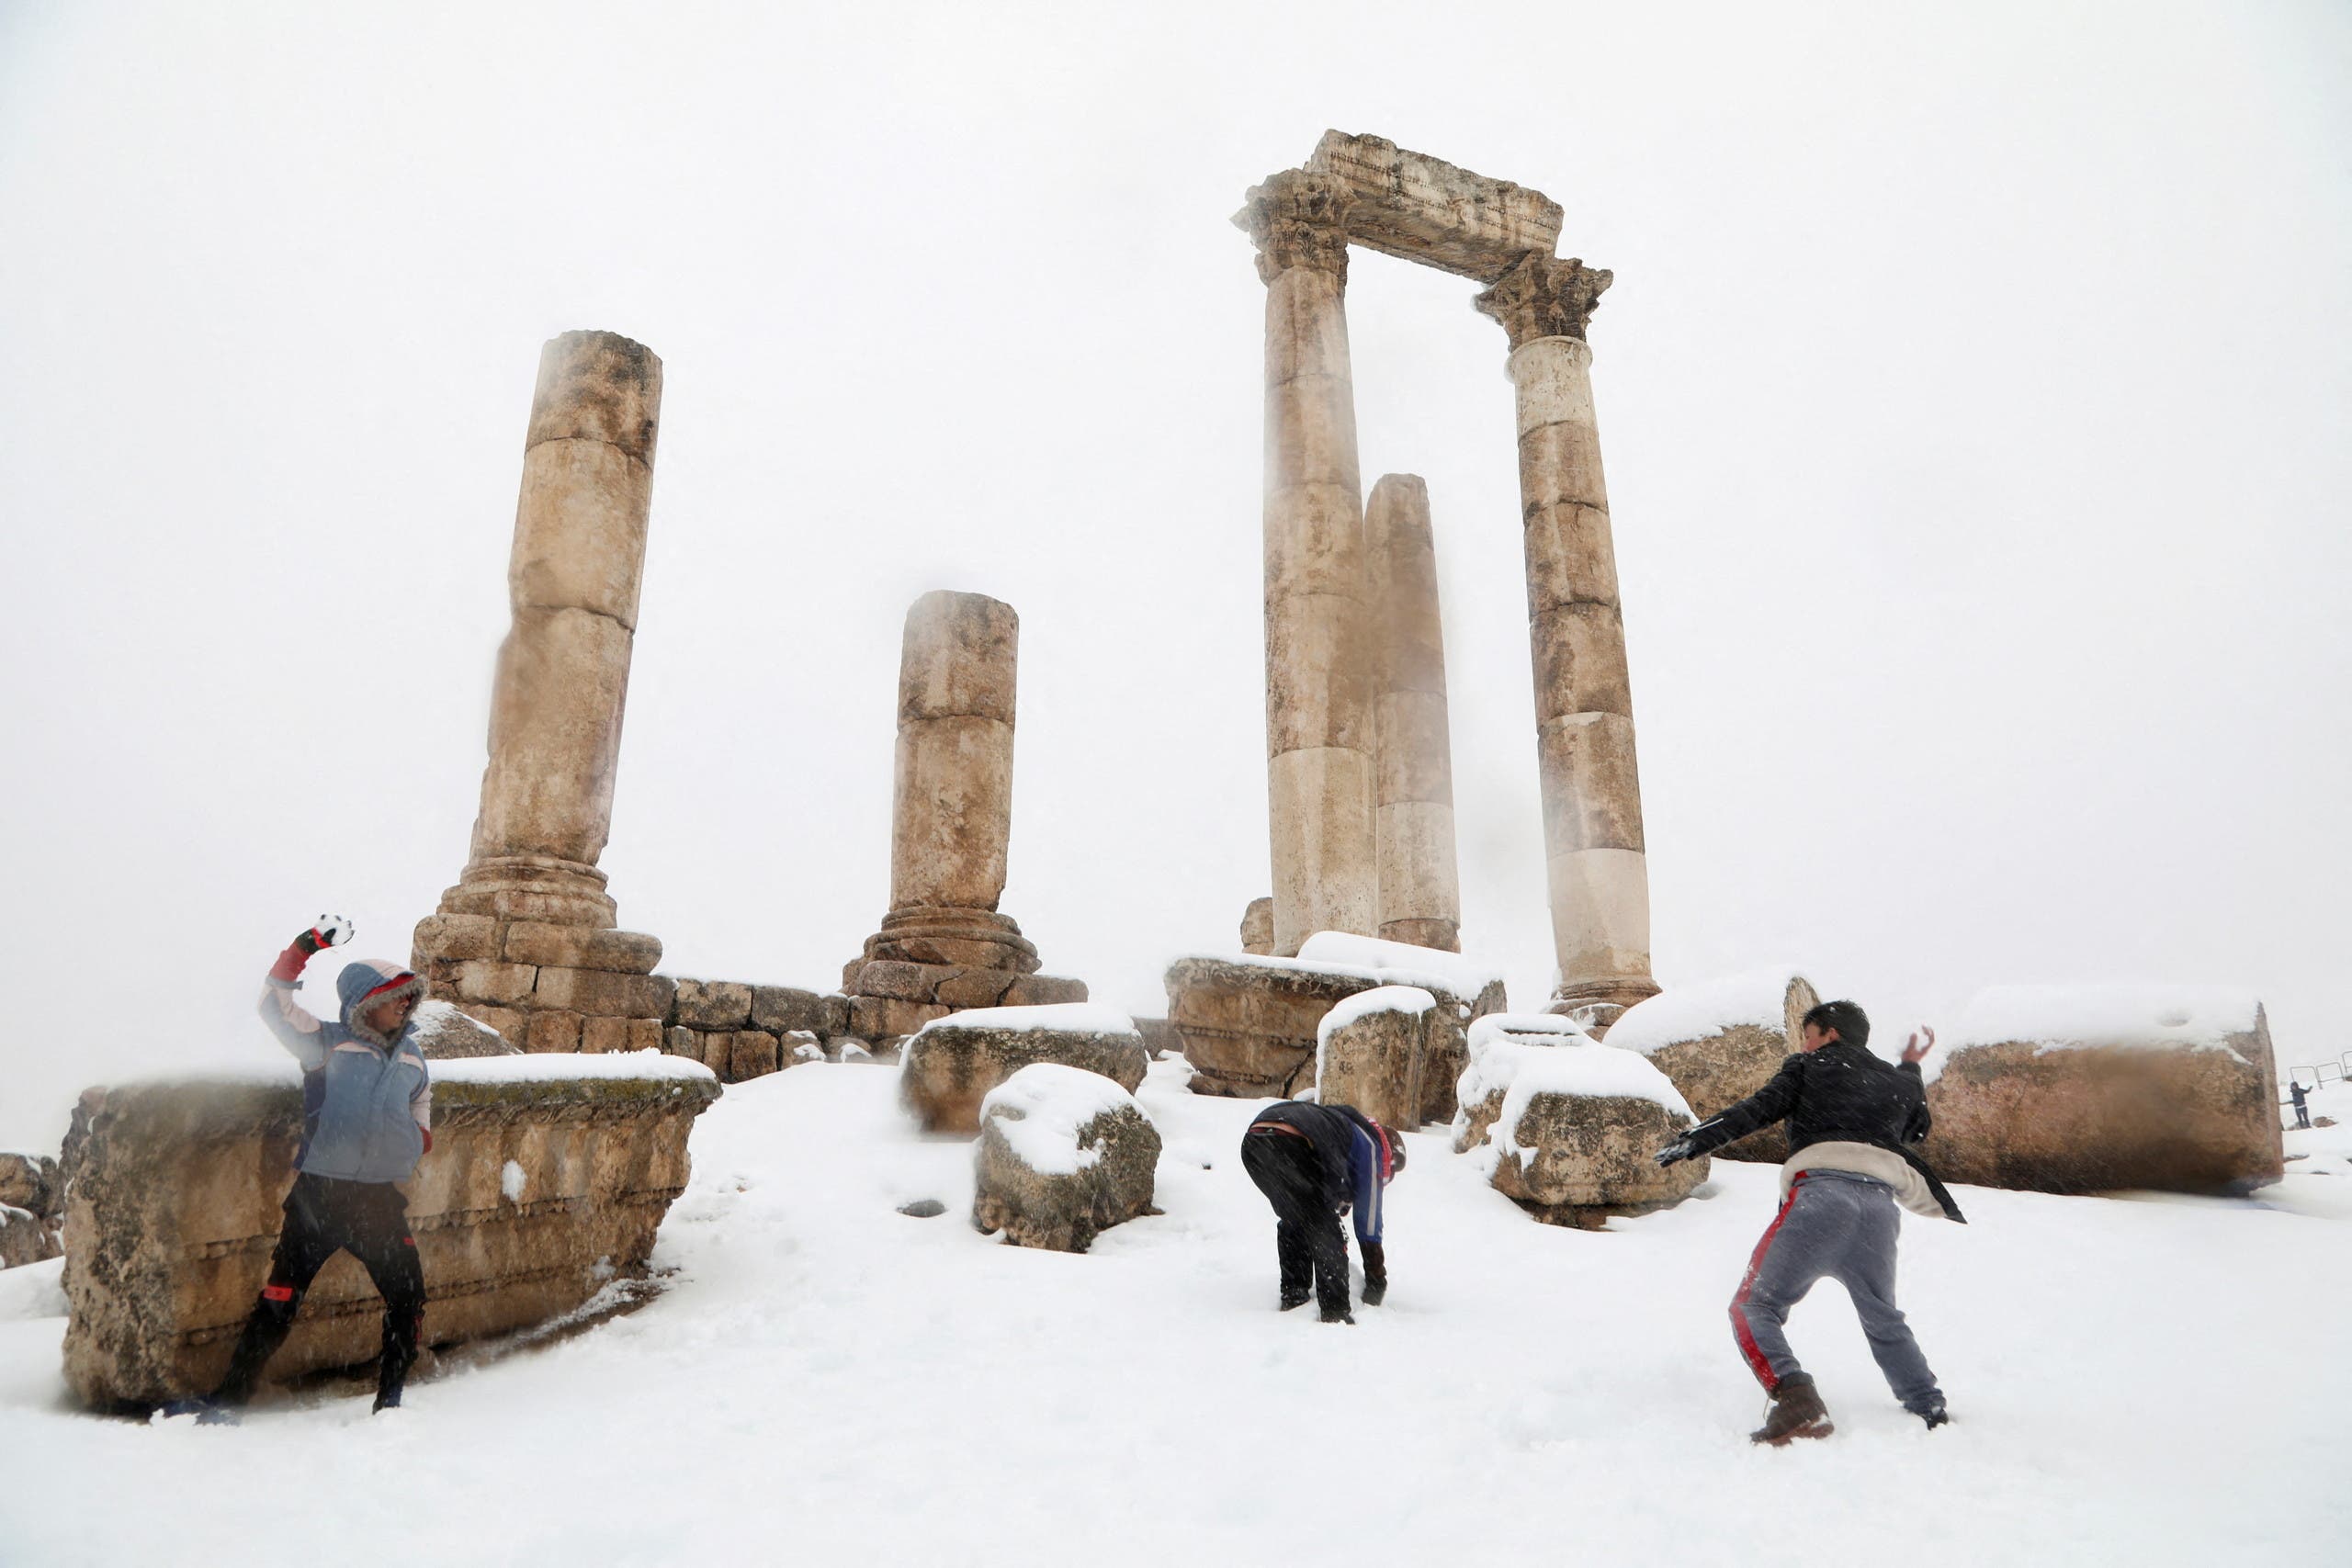 Boys play with snow at the pillars of the Roman Temple of Hercules at Amman Citadel, an ancient Roman landmark, covered in snow in Amman, Jordan January 27, 2022. (Reuters)